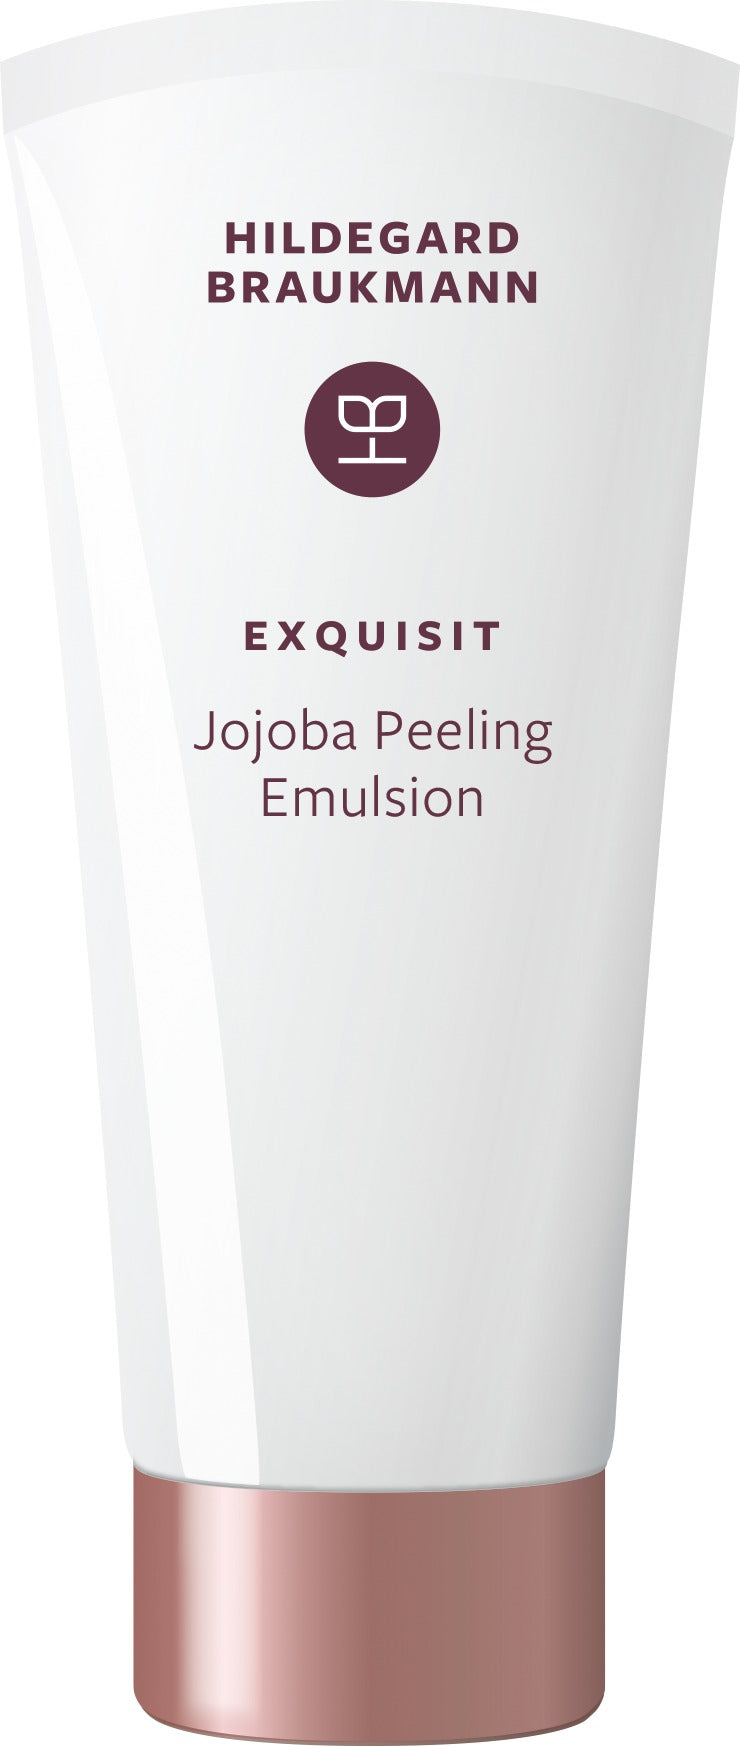 Hildegard Braukmann Exquisit Jojoba Peeling Emulsion (100ml)